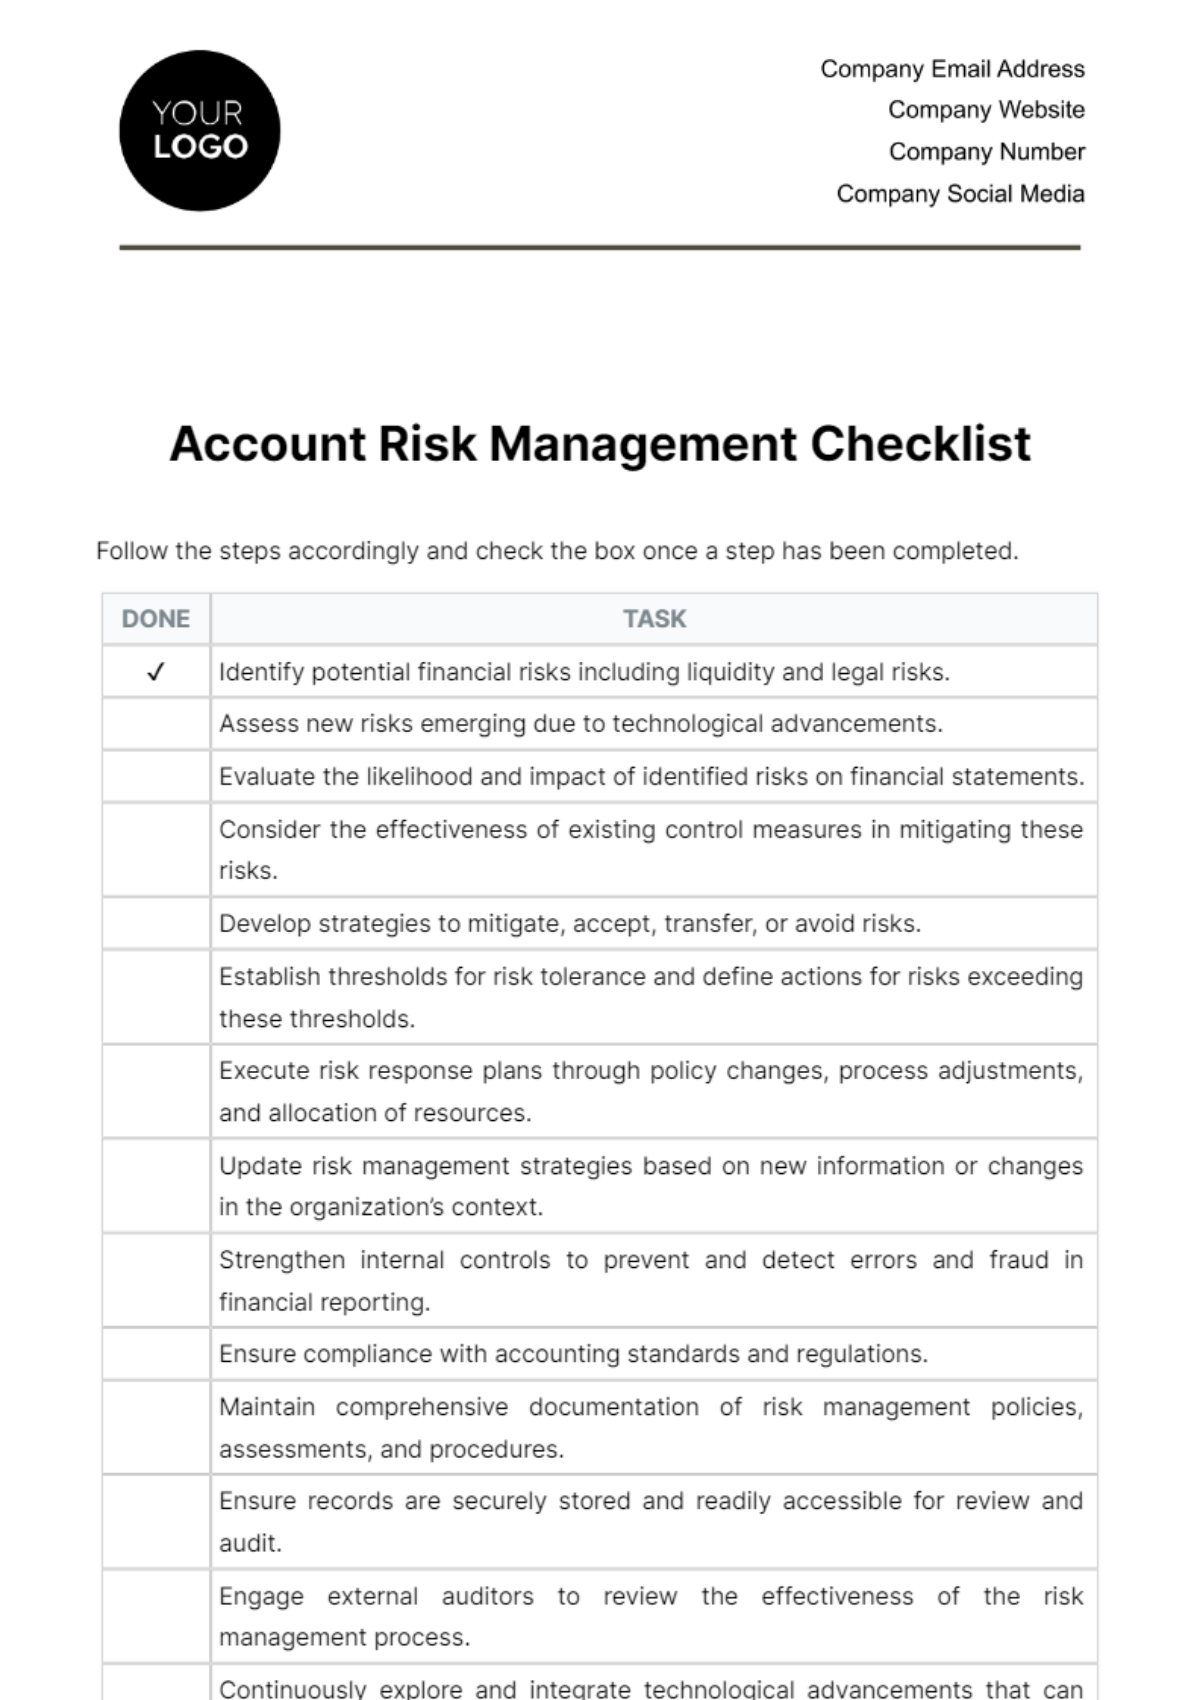 Account Risk Management Checklist Template